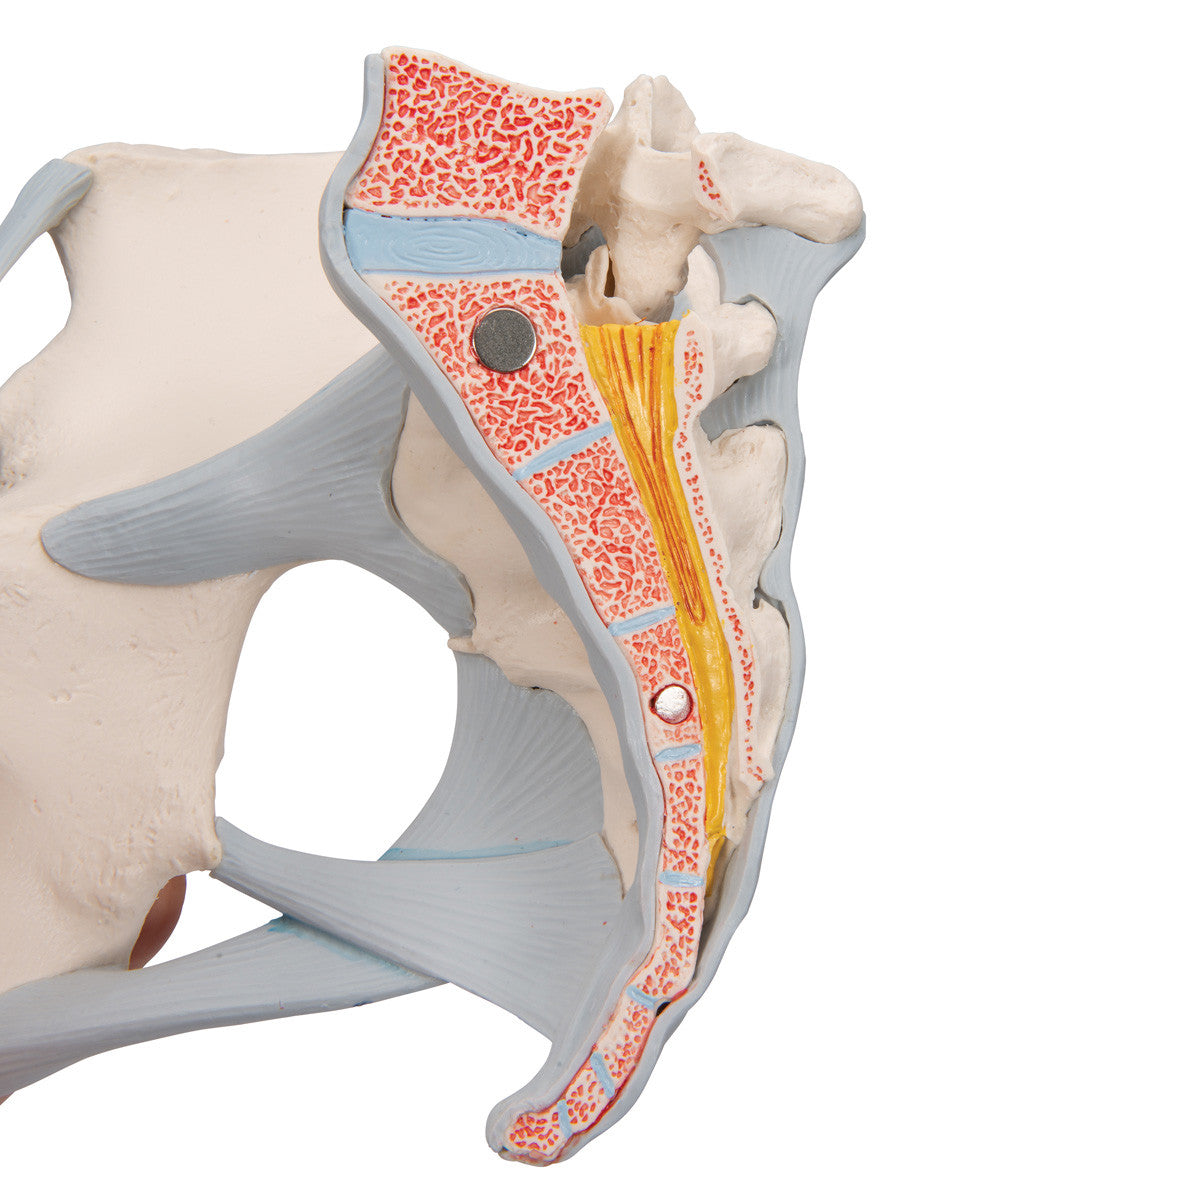 Female Pelvis Skeleton Model with Ligaments, Muscles & Organs, 4 part - 3B Scientific H20/3